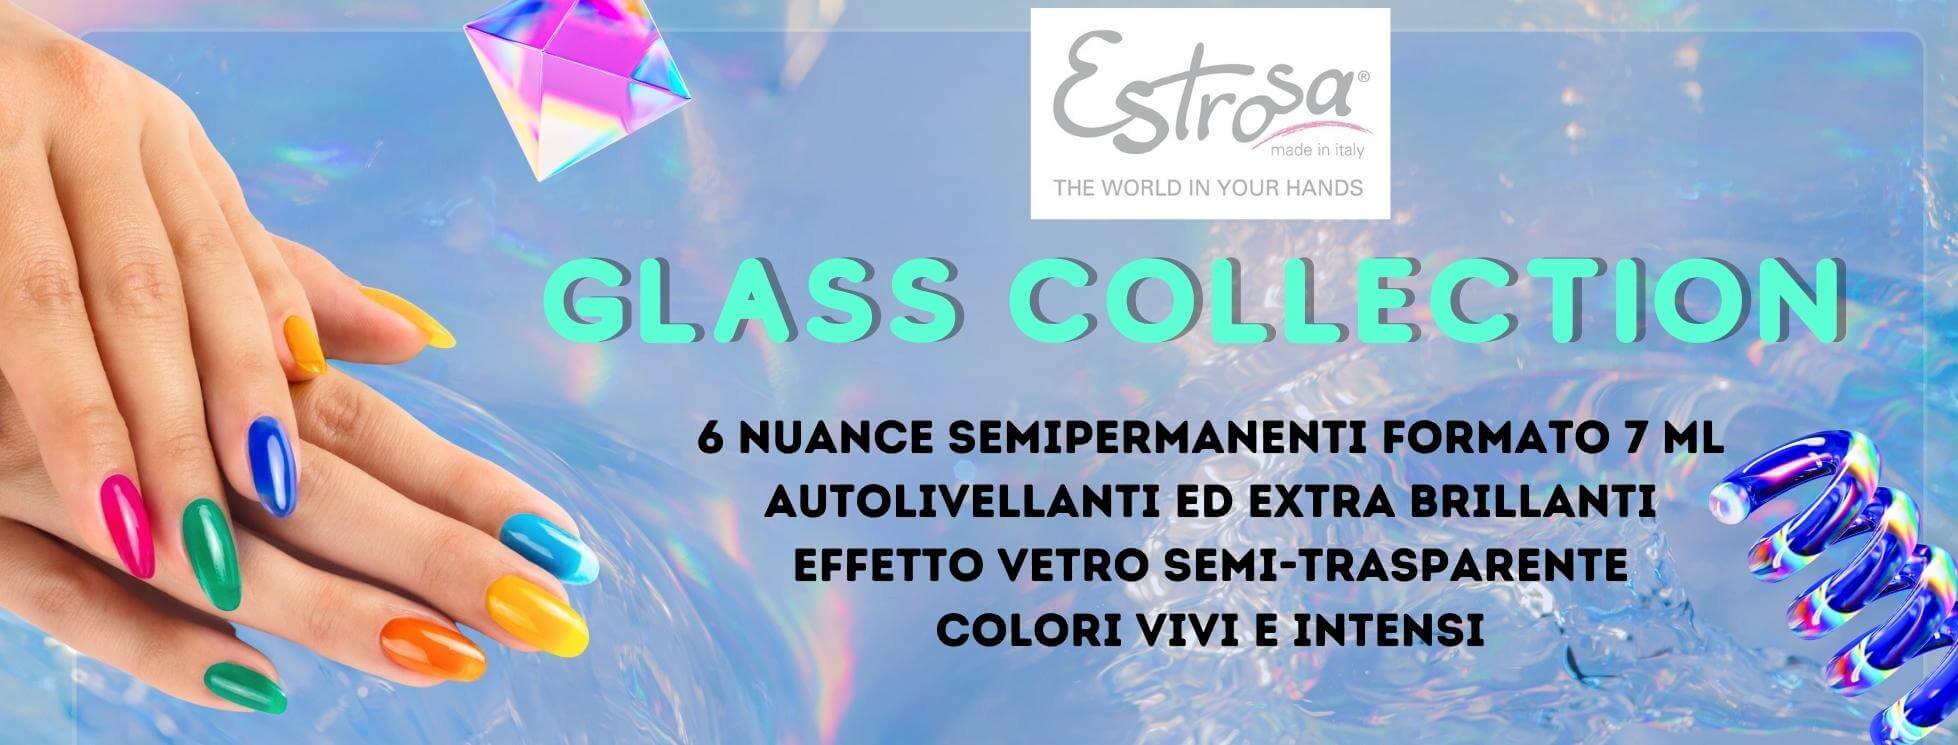 Glass Collection Estrosa